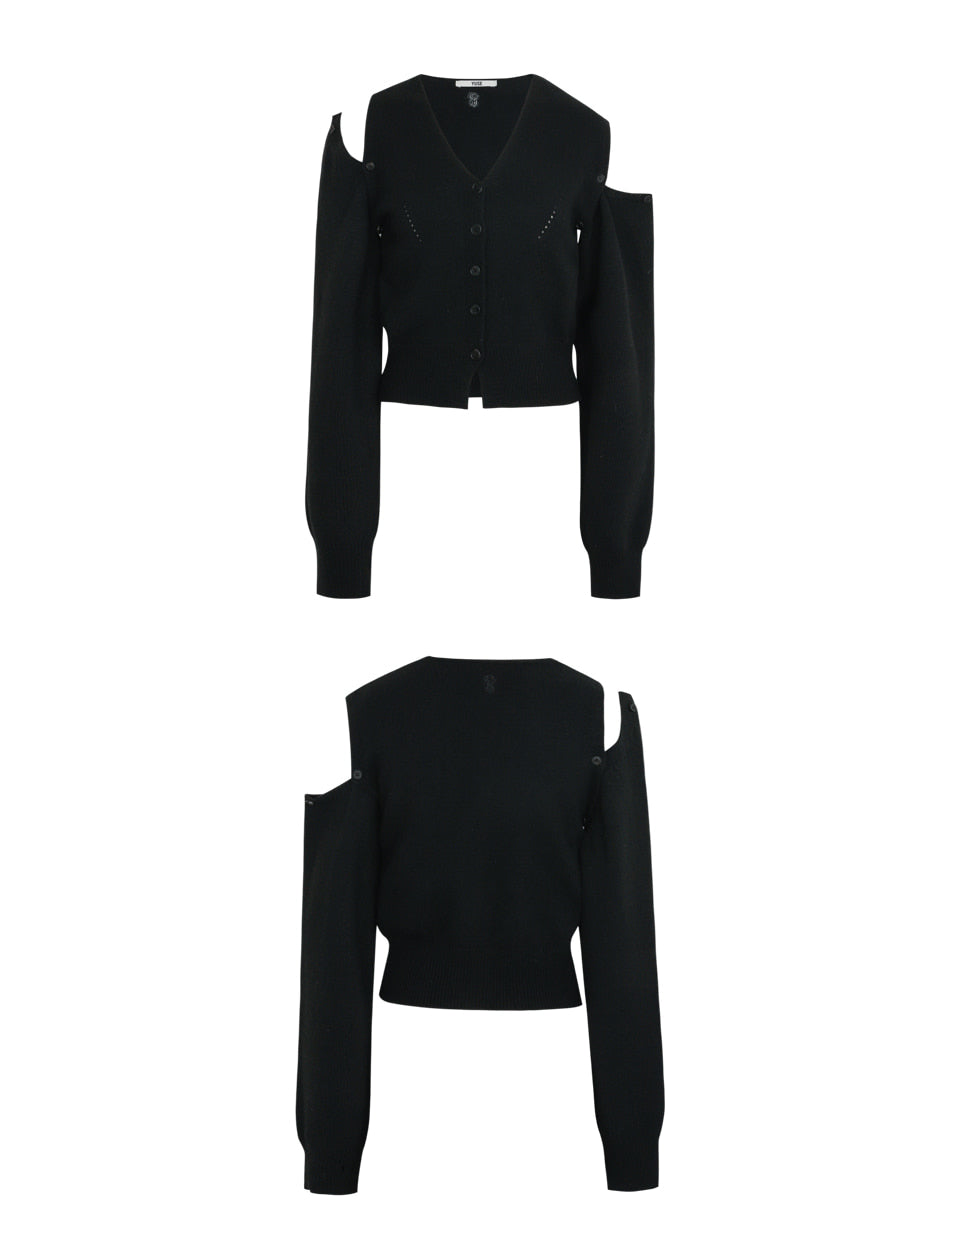 YUSE Cashmere Unbalance Shoulder Cut Crop Knit Cardigan - Black